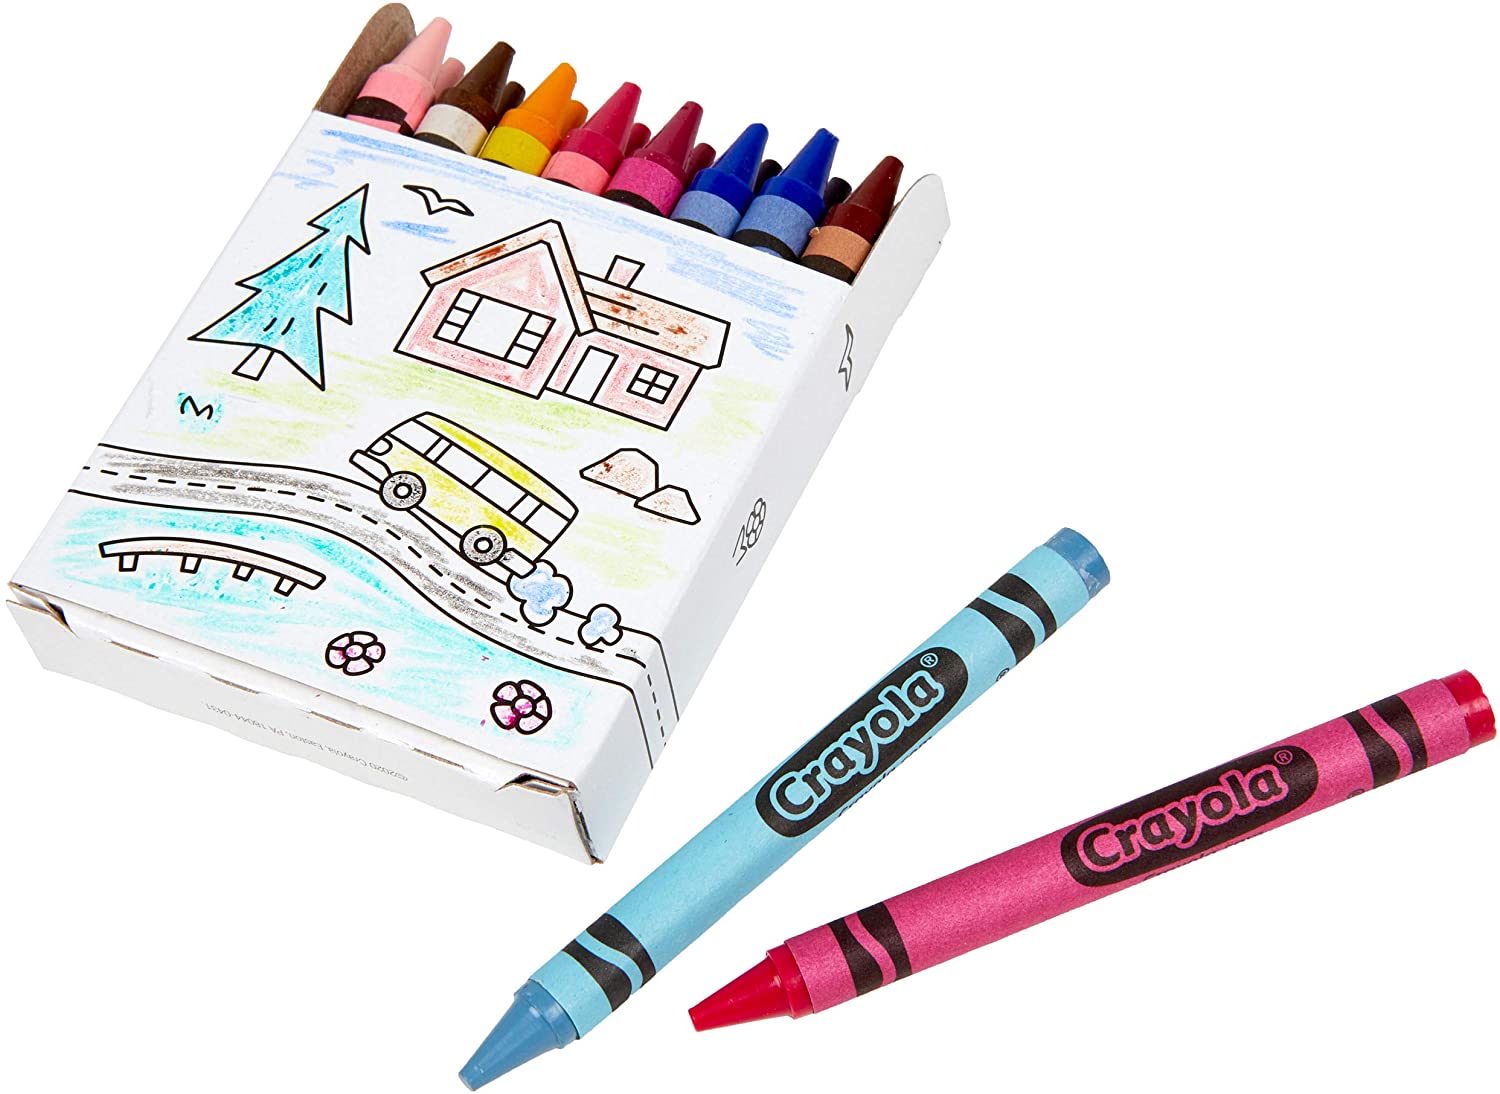 Crayola Washable Crayons - 64 Count (2 Boxes), Bulk Crayons for Kids,  Crayon Set, Kids Art Supplies, Coloring Book Crayons [ Exclusive]